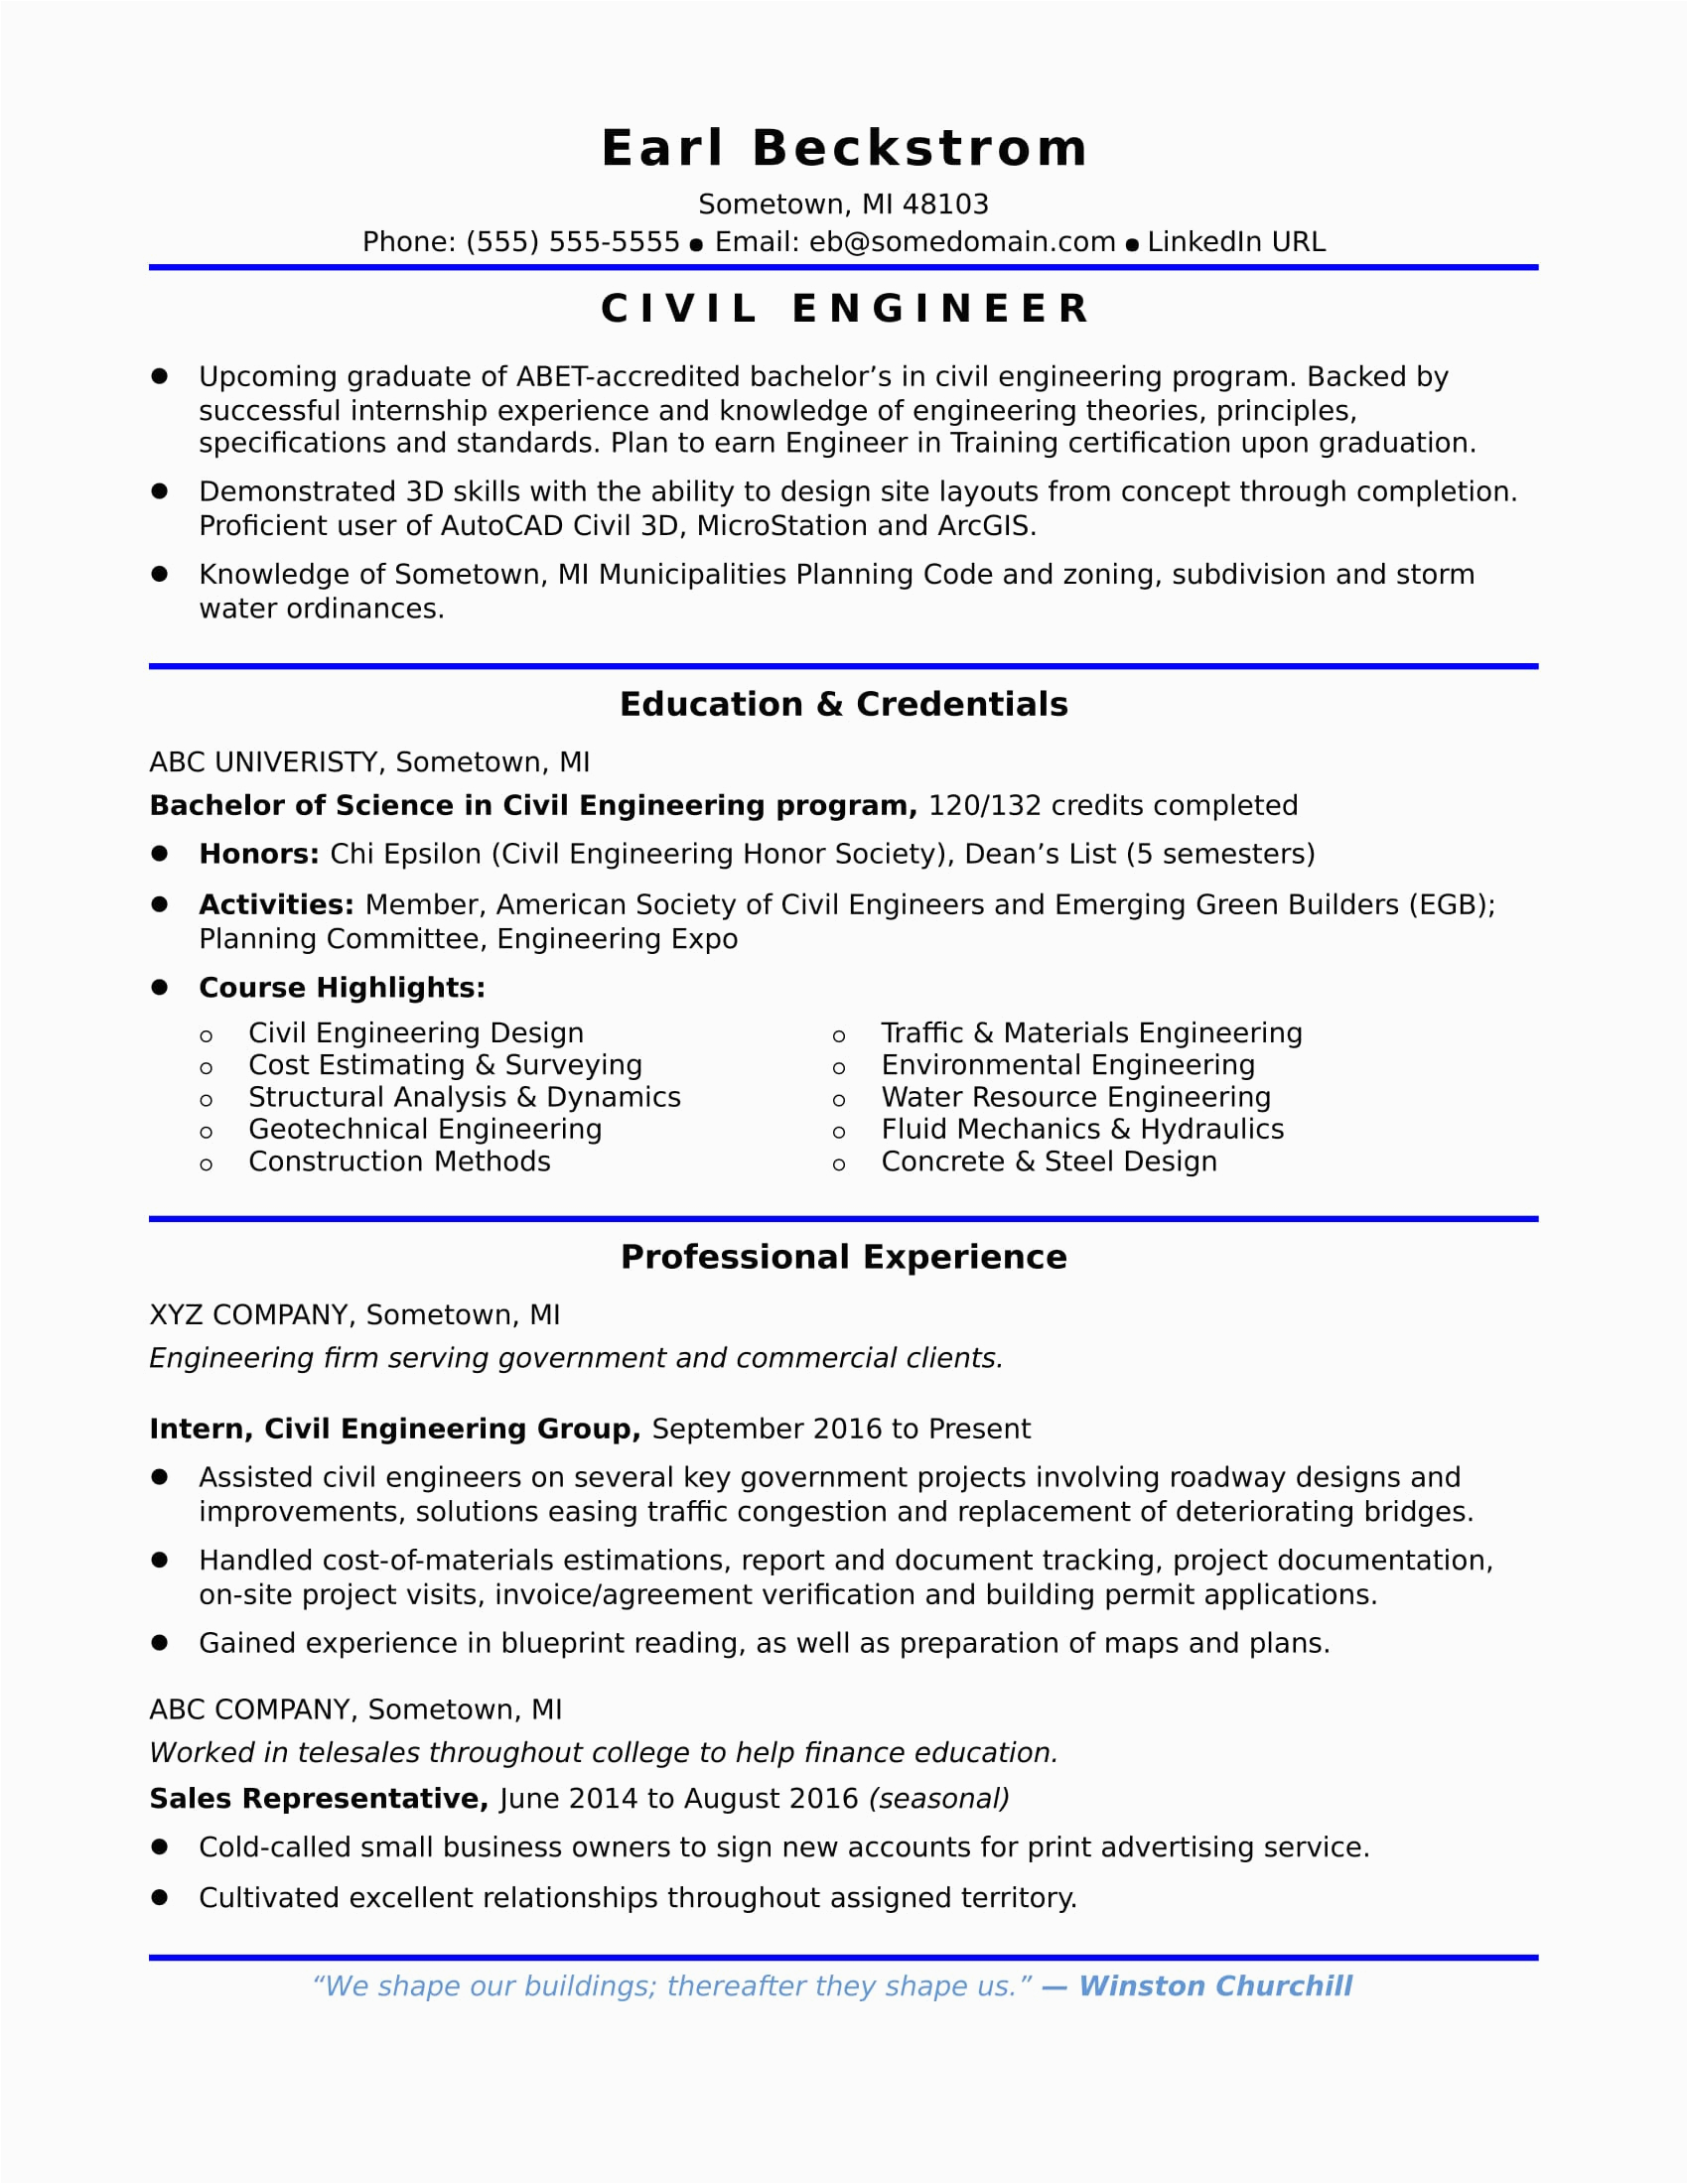 Senior Civil Engineer Resume Sample Doc Sample Resume Civil Site Engineer Civil Site Engineer